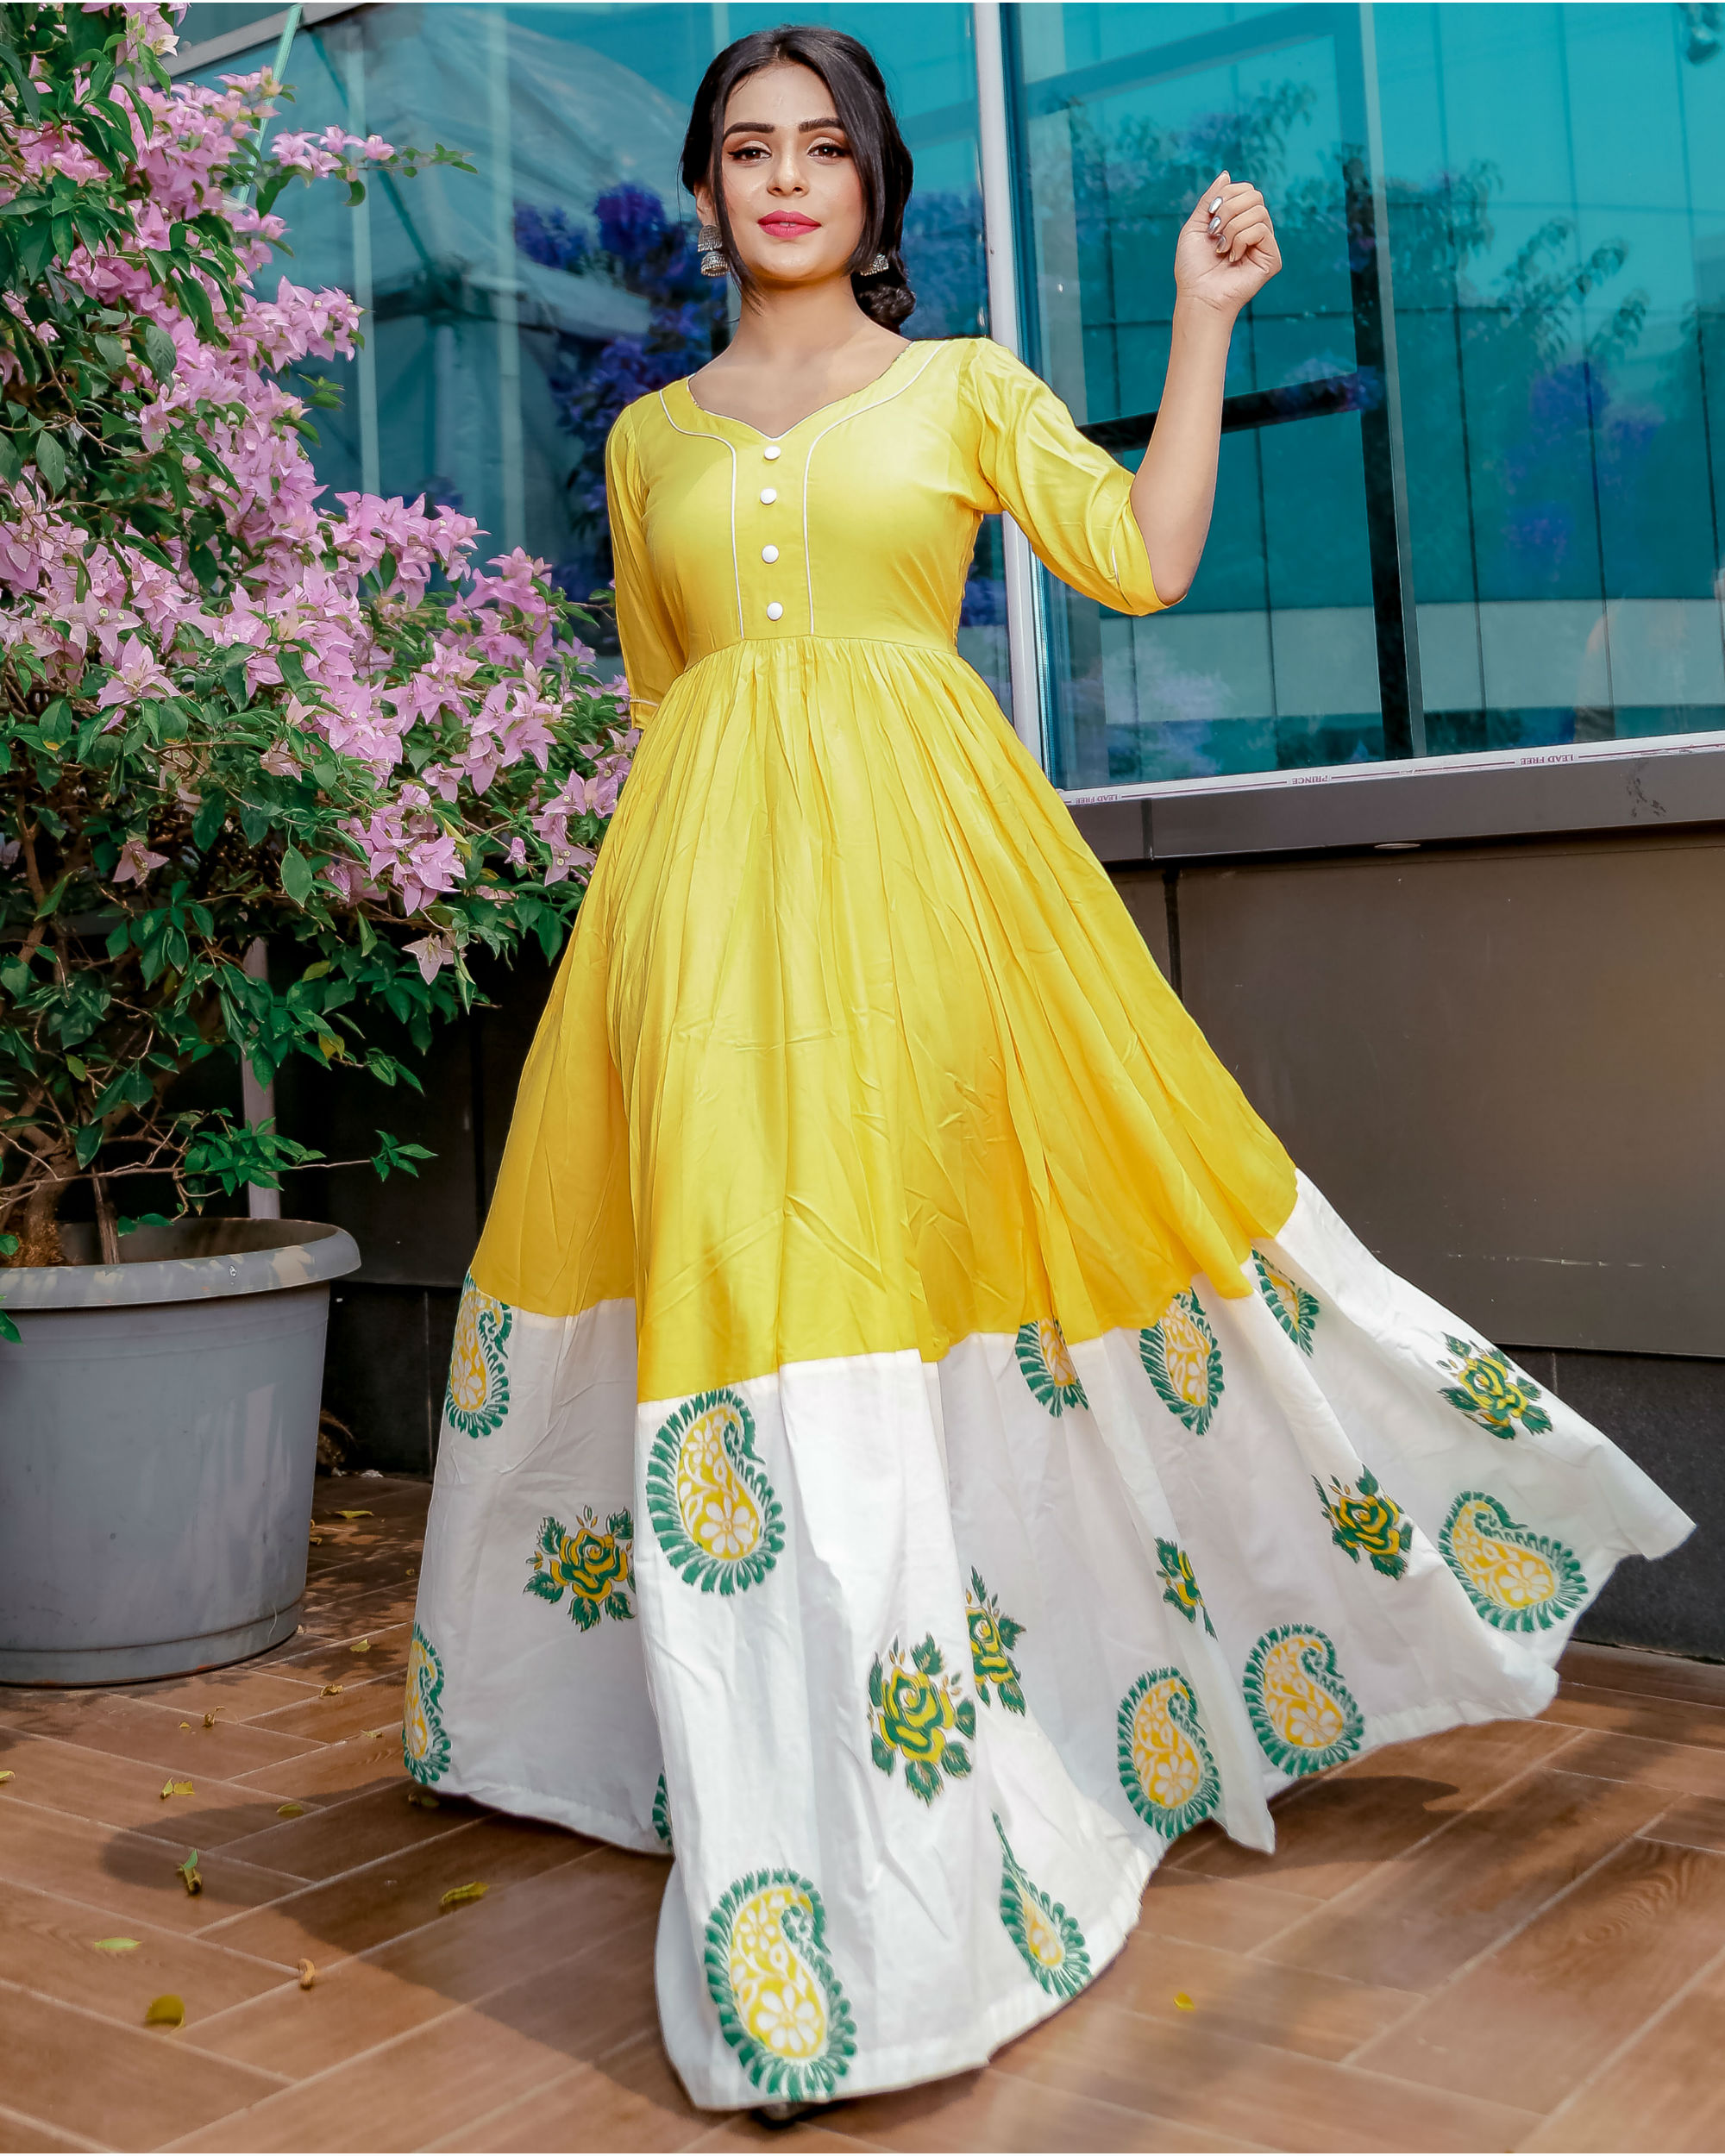 Yellow Midi Dress - Floral Print Midi Dress - Sleeveless Dress - Lulus